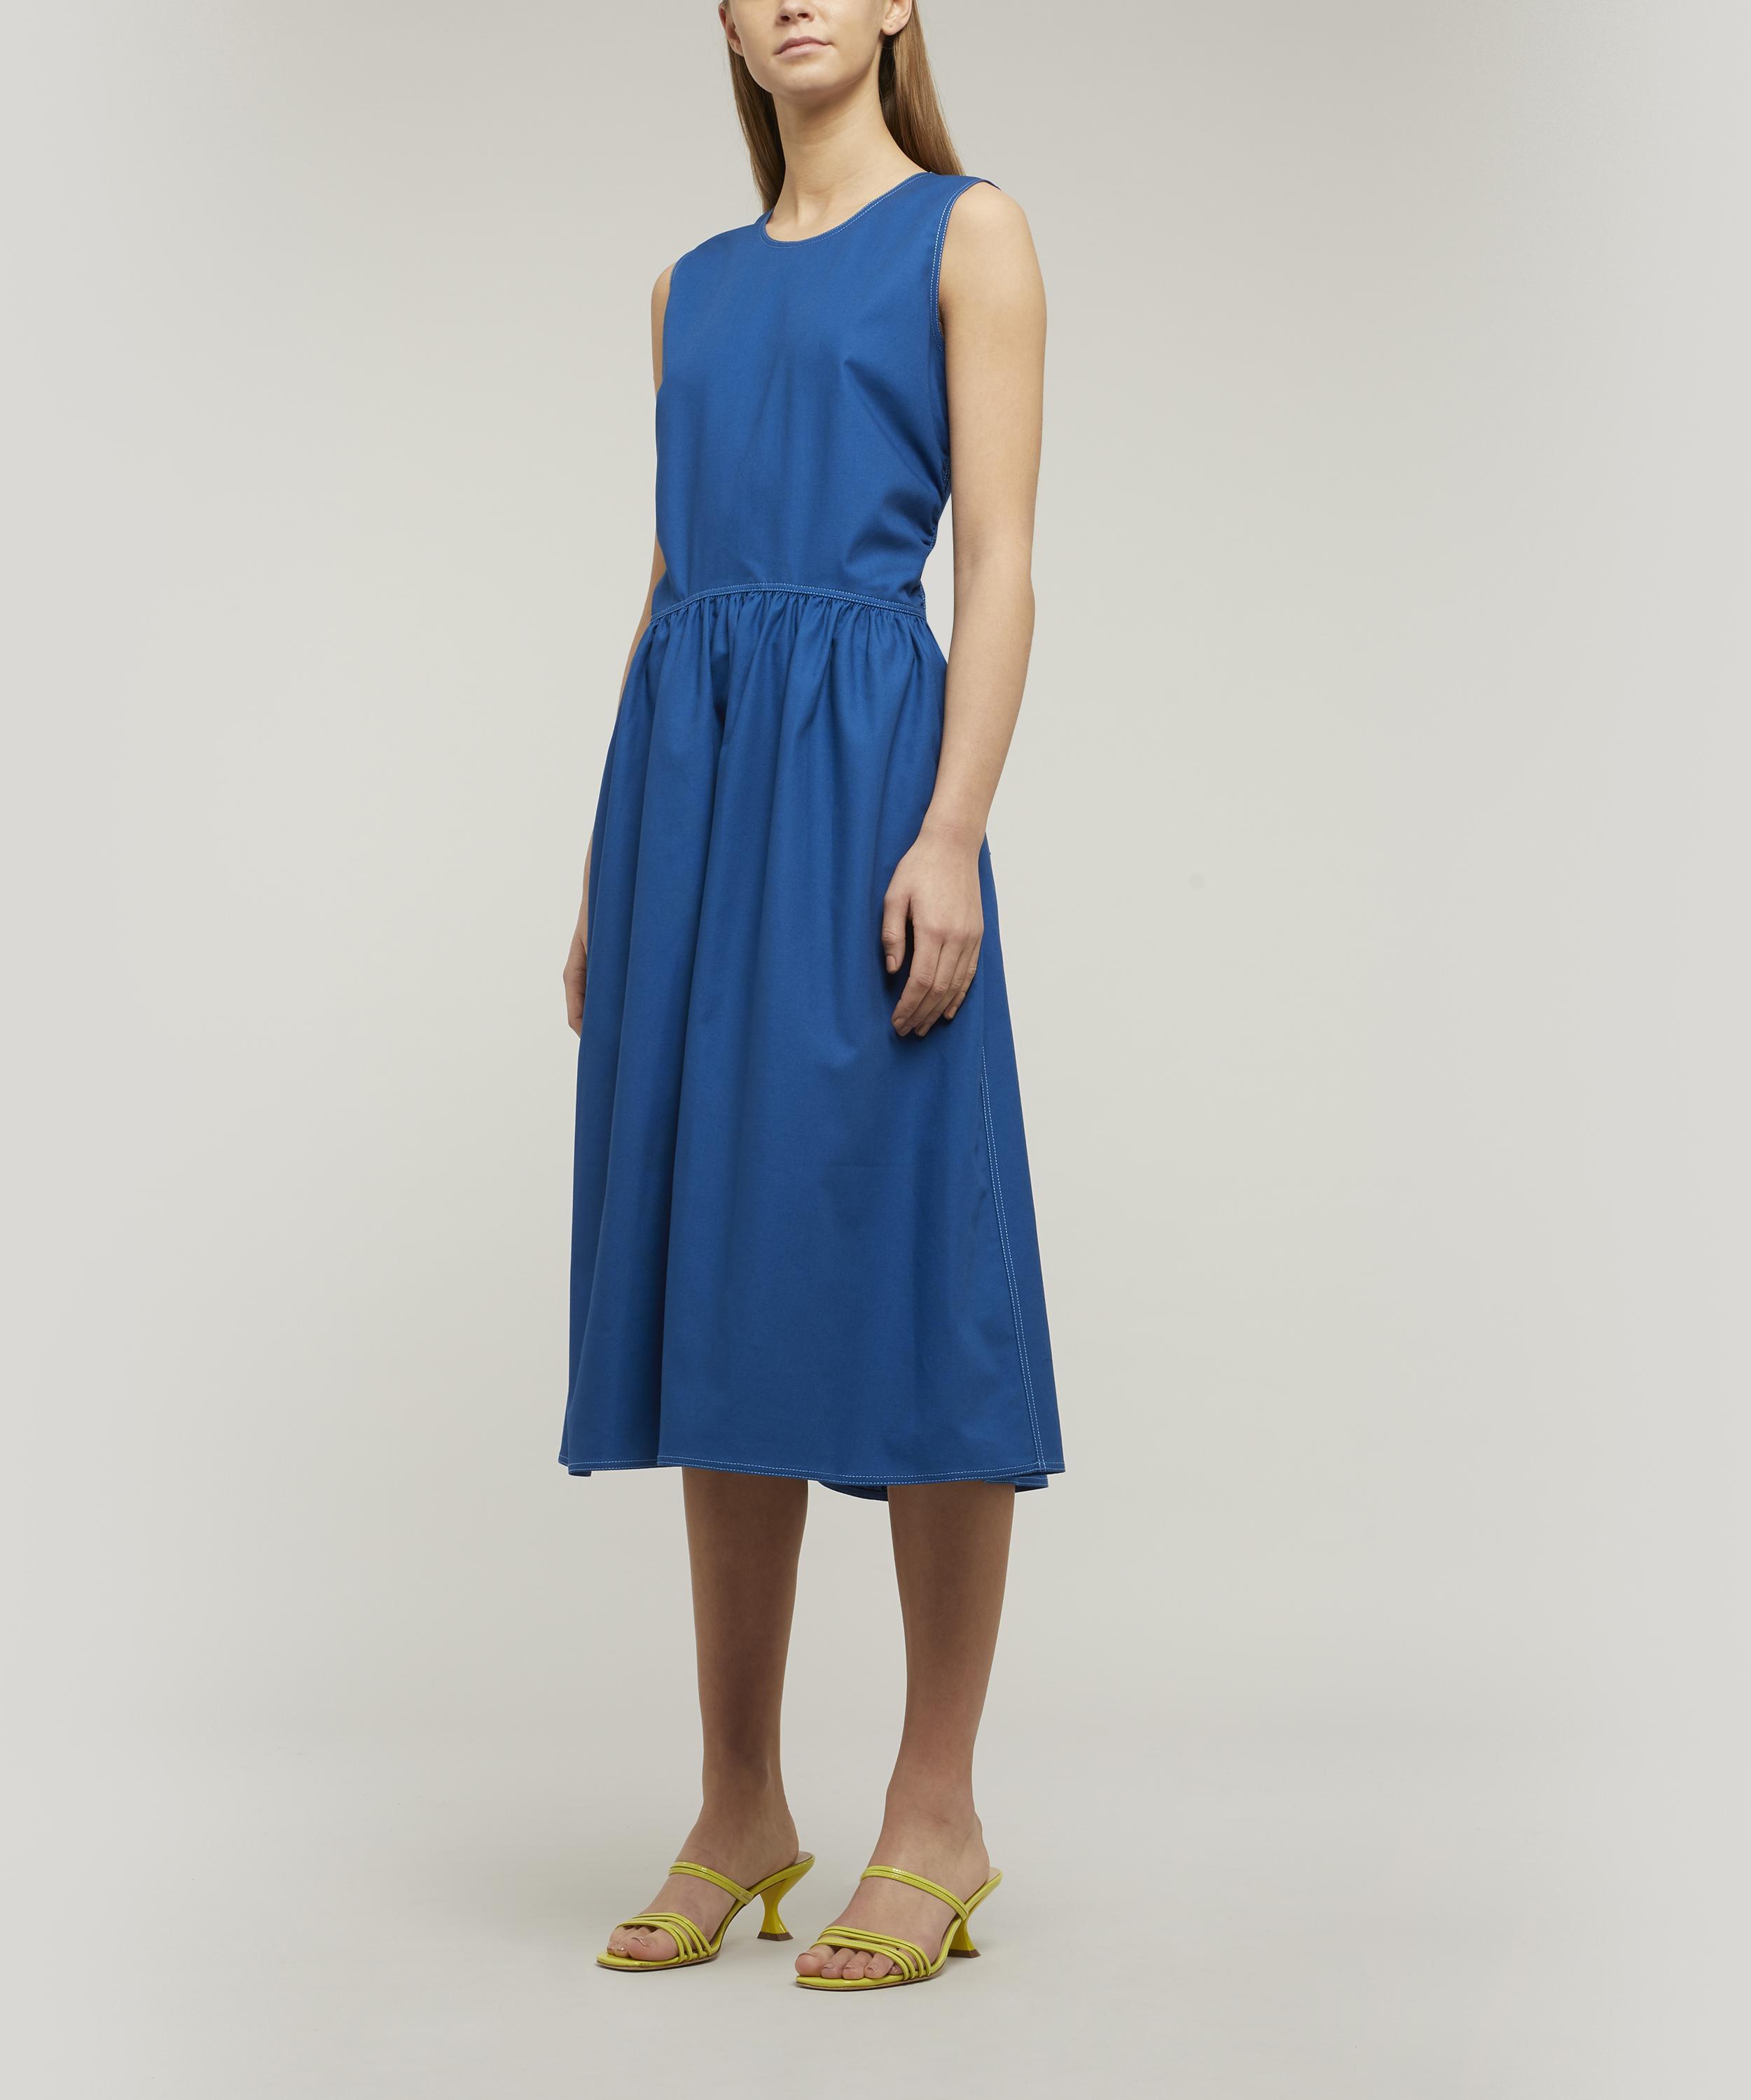 Sies Marjan Violetta Cotton-canvas Dress in Blue - Lyst